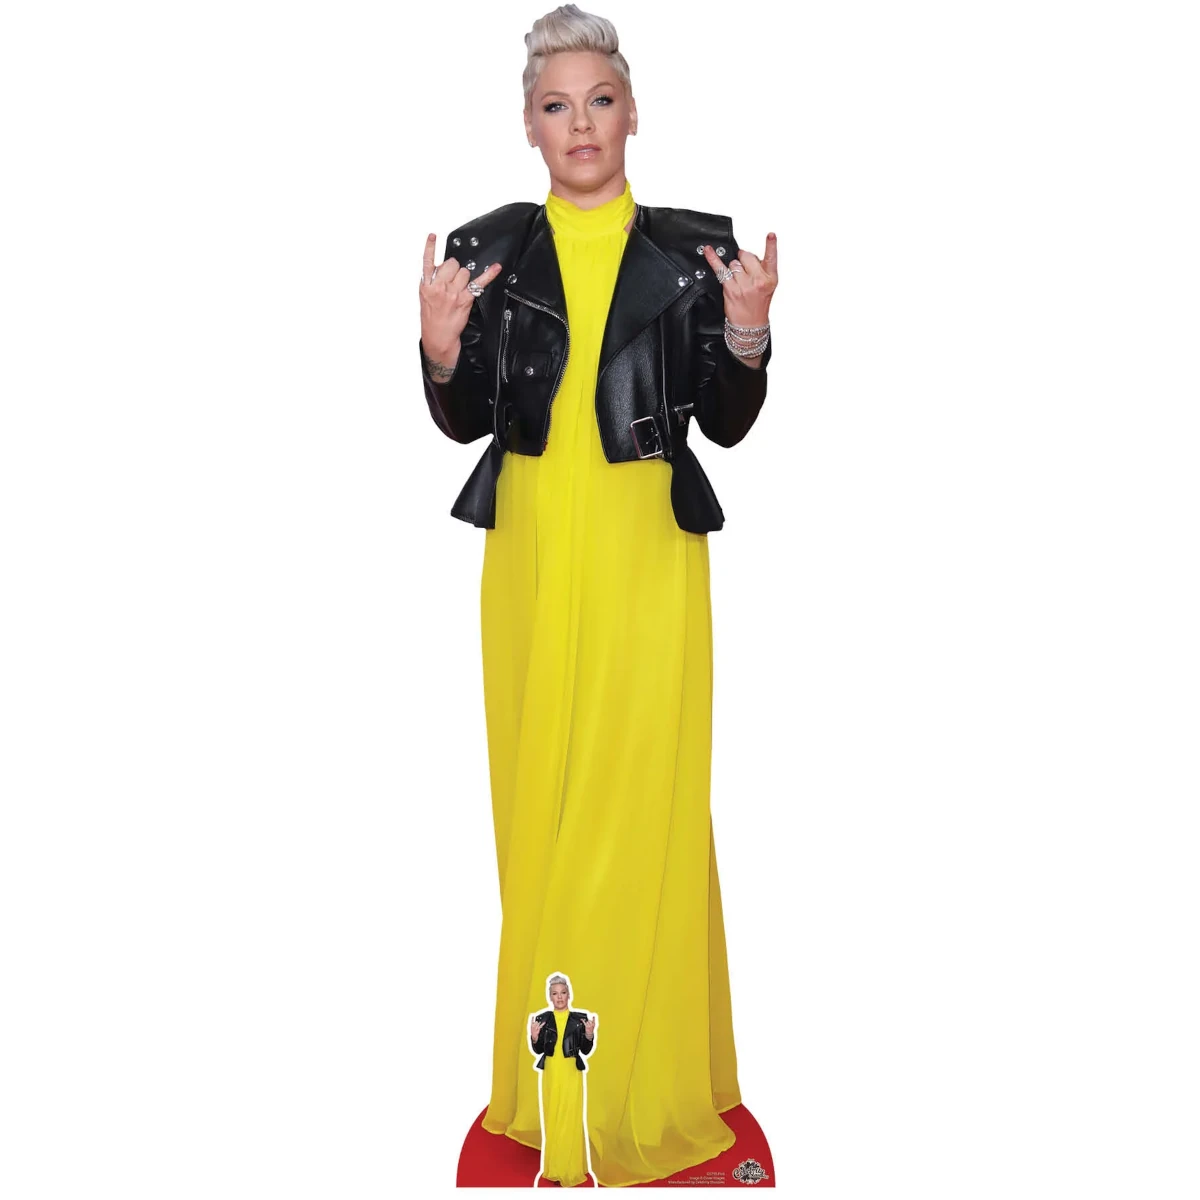 CS795 Pink 'Yellow Dress' (American SingerSongwriter) Lifesize + Mini Cardboard Cutout Standee Front